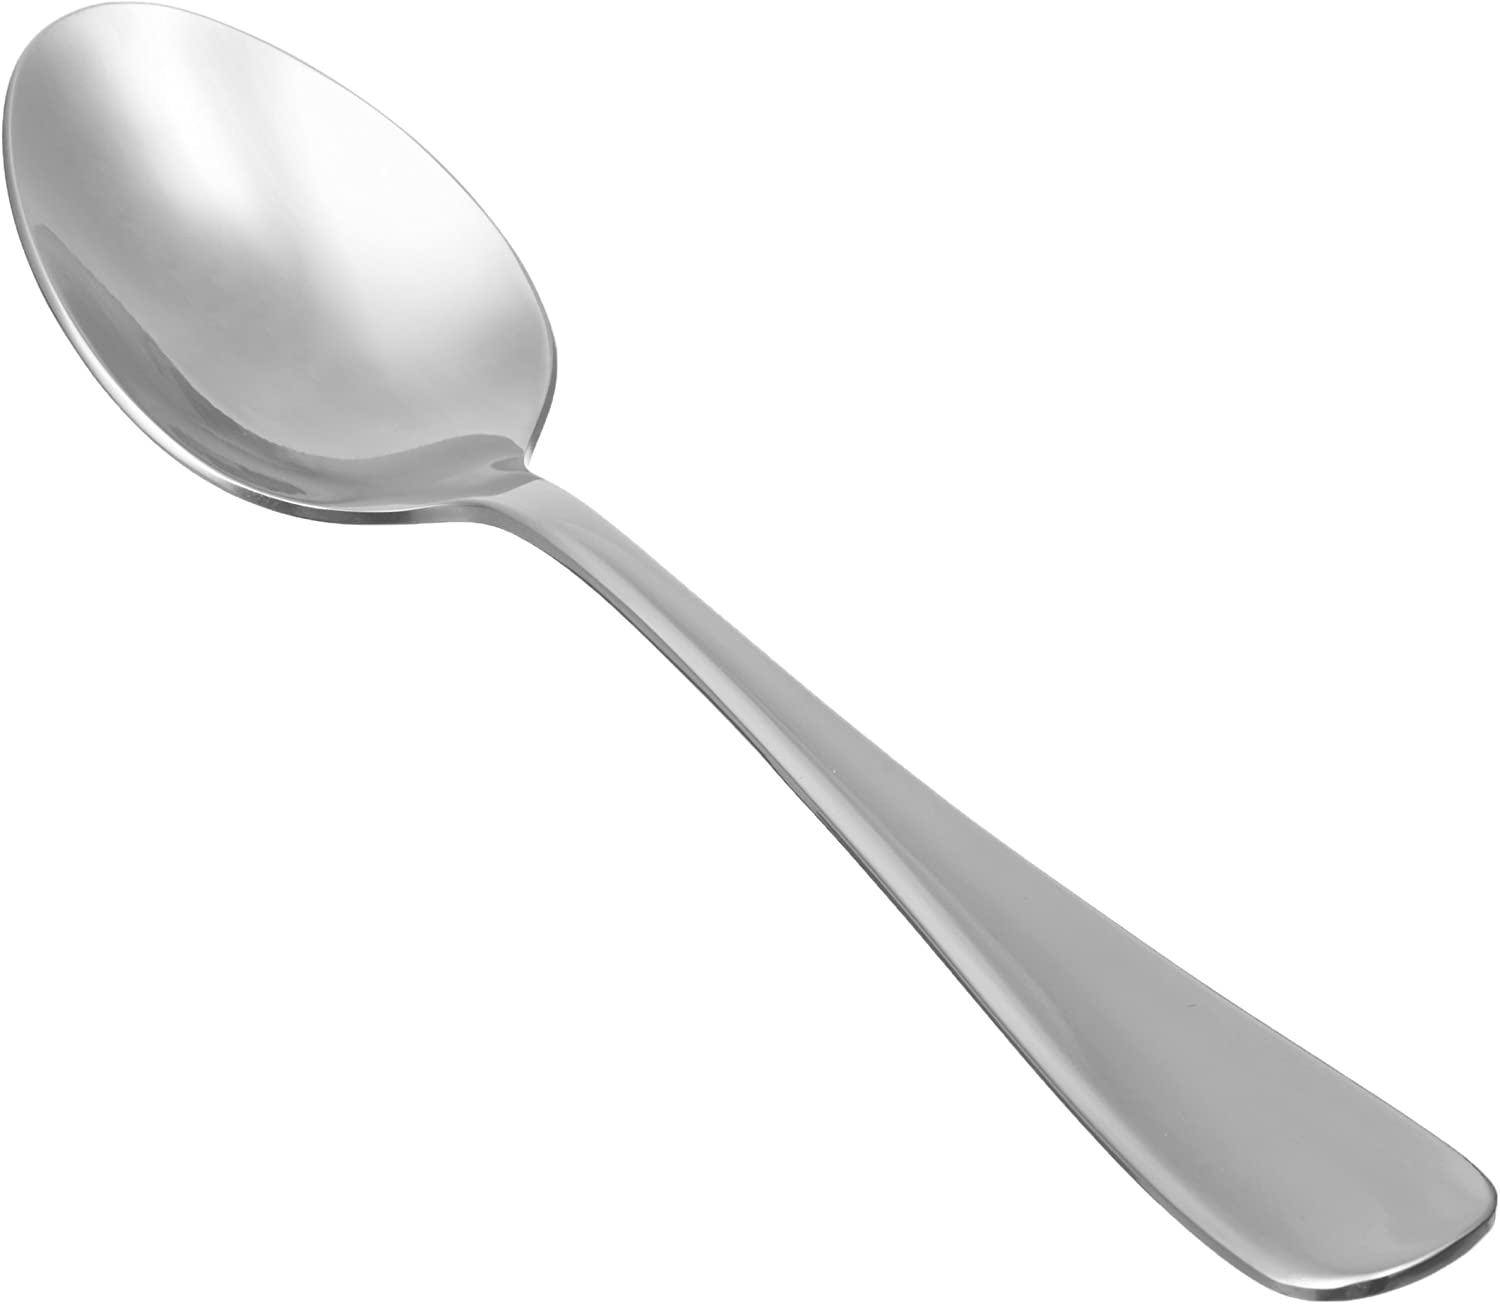 Quick Contest Fandom - teh spoon roblox